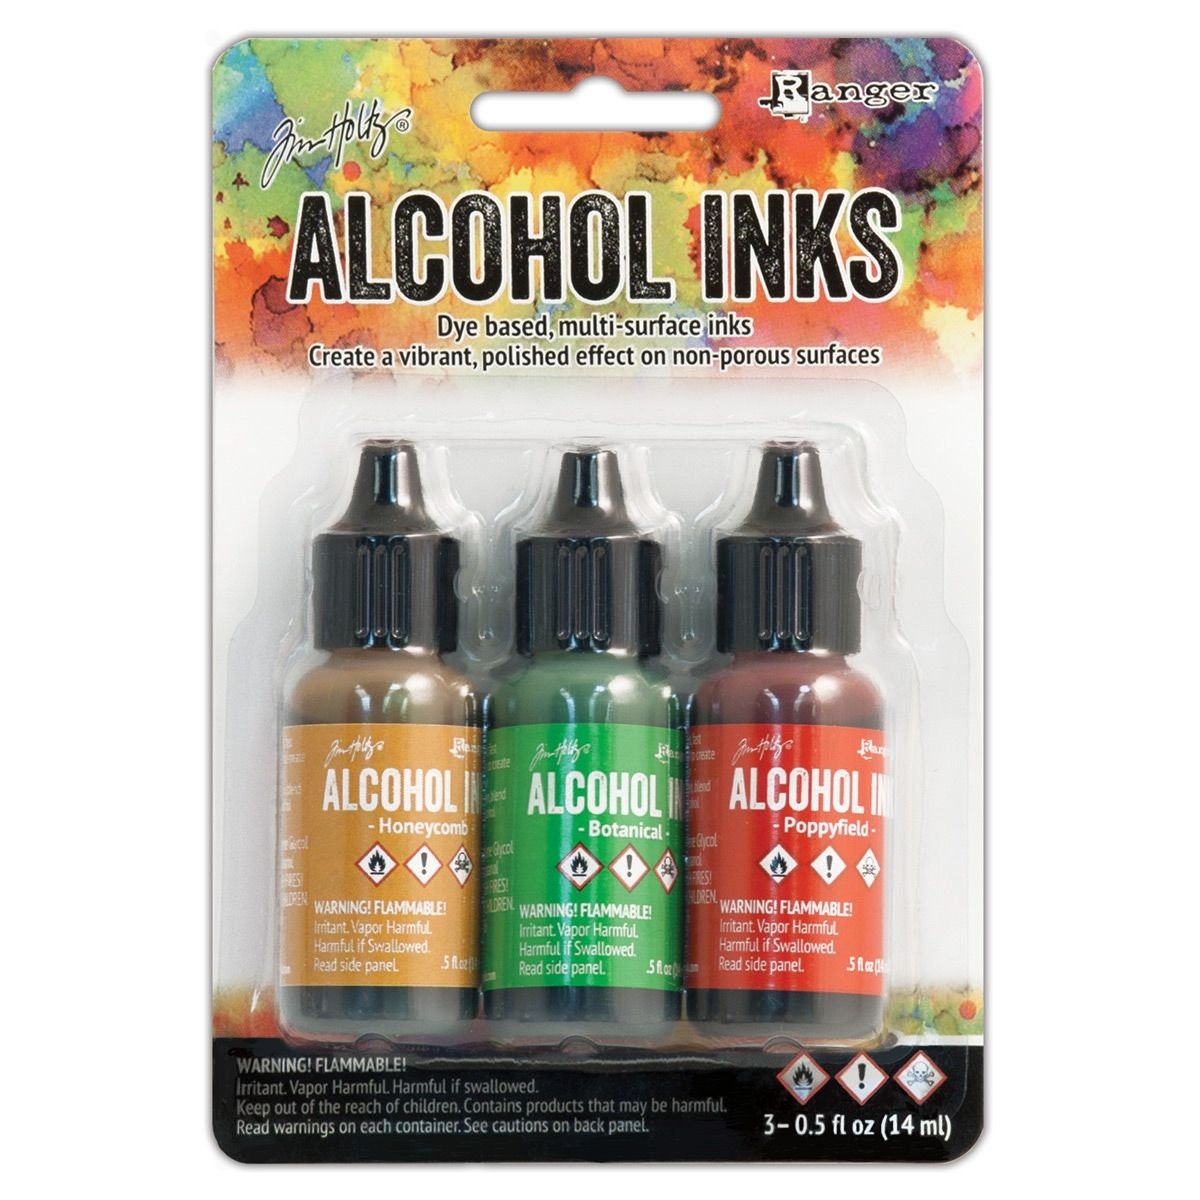 Keda Dye 5 Color Liquid Dye Kit Contains 5 Alcohol Dye Colors in